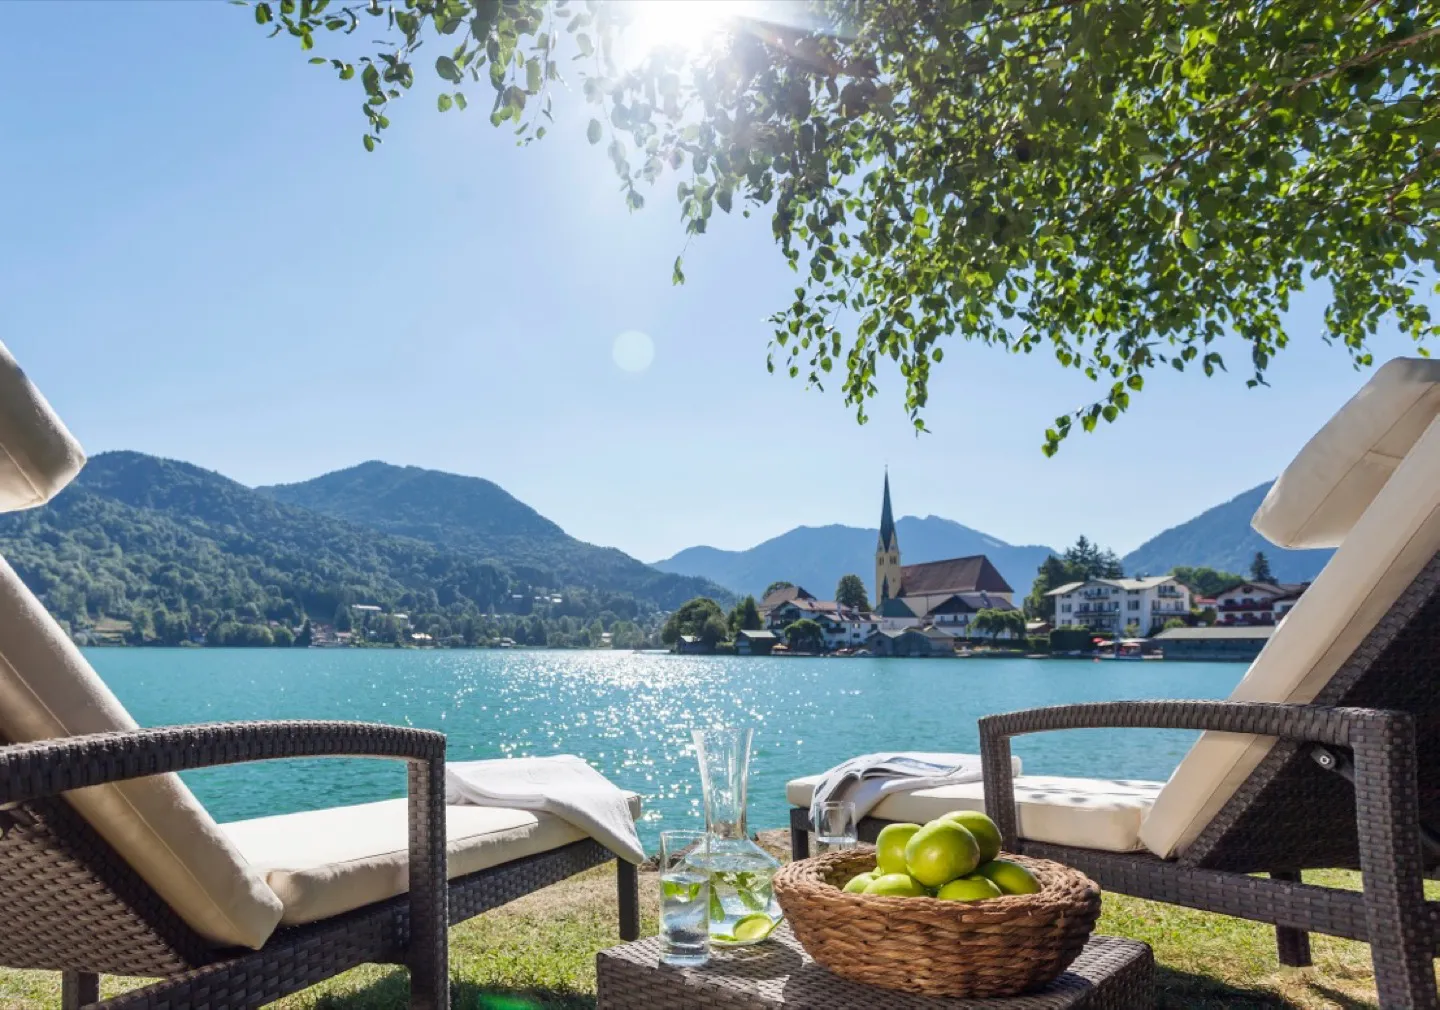 Enjoy breathtaking scenery throughout Bavaria on a German self drive holiday